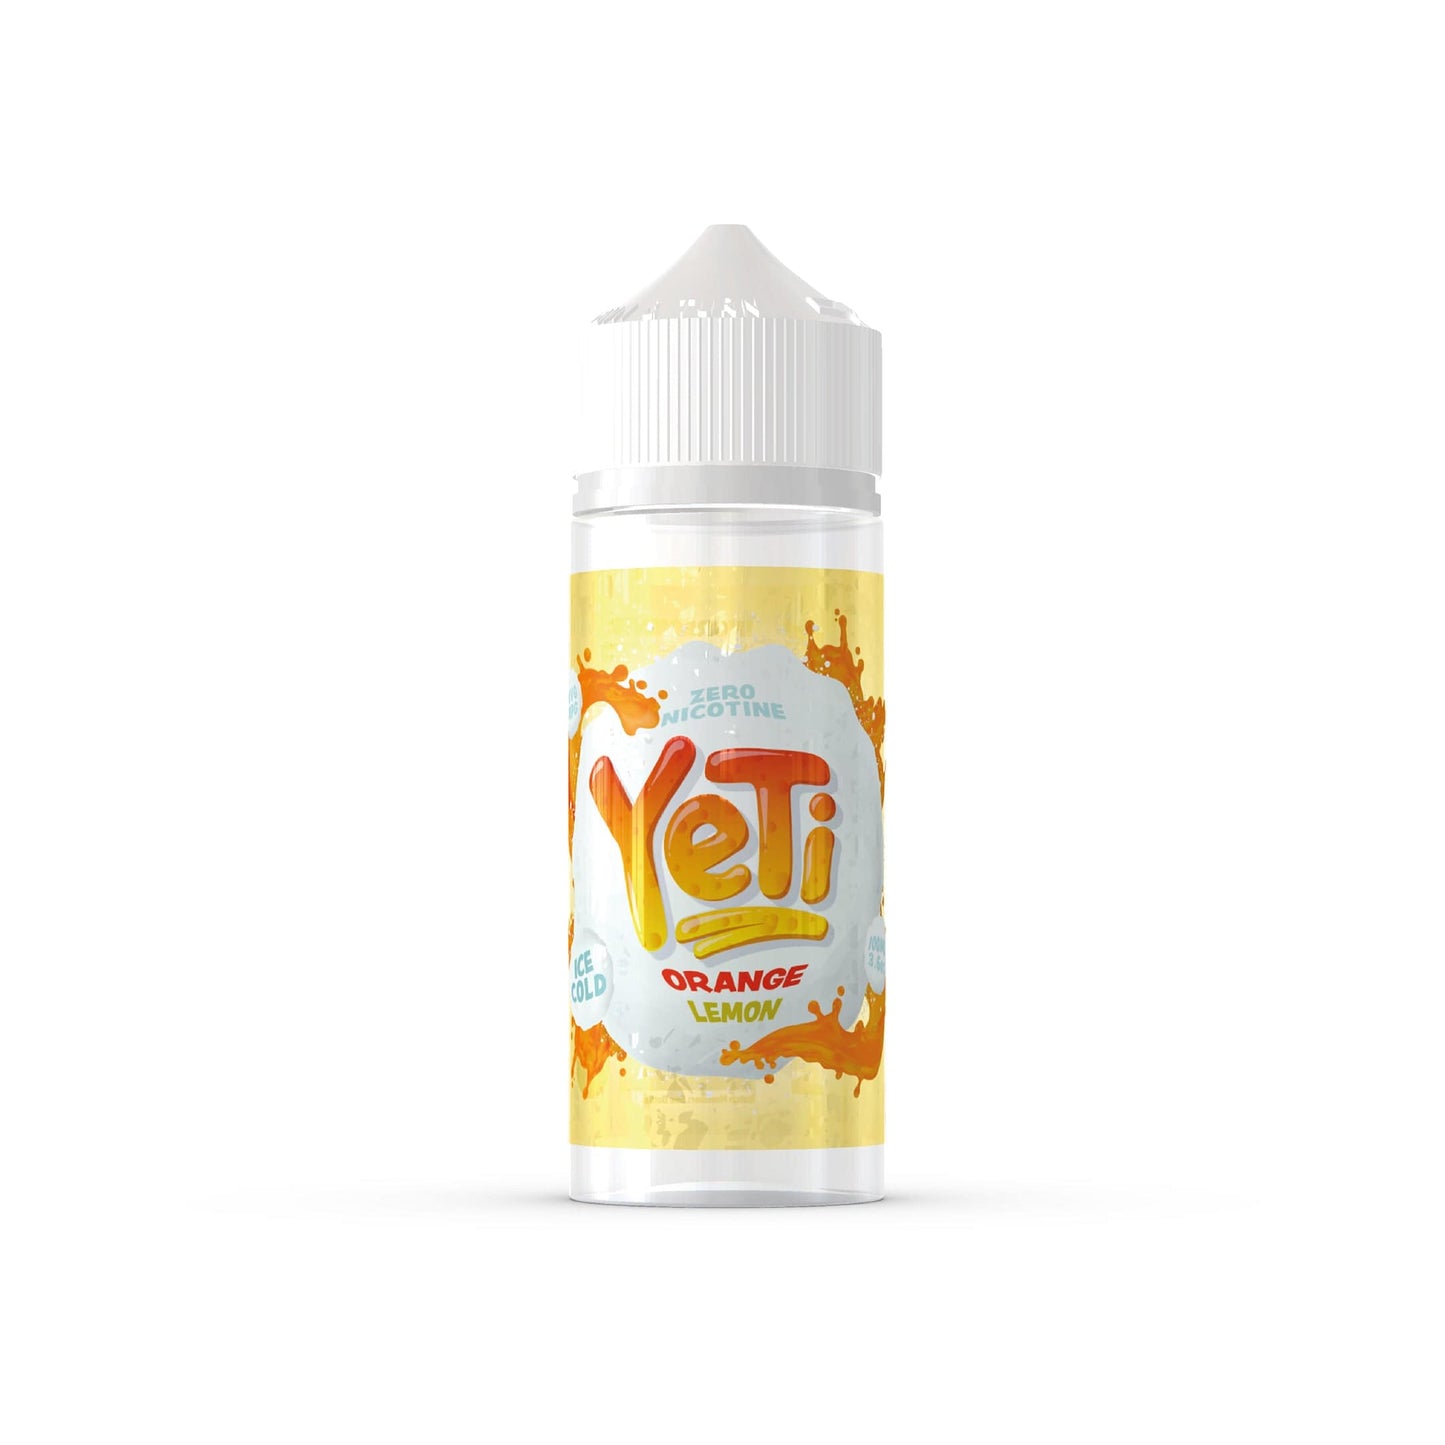 YETI E-Liquid Shortfill Eliquids Orange & Lemon Yeti Ice Cold 100ml Shortfill E-Liquid